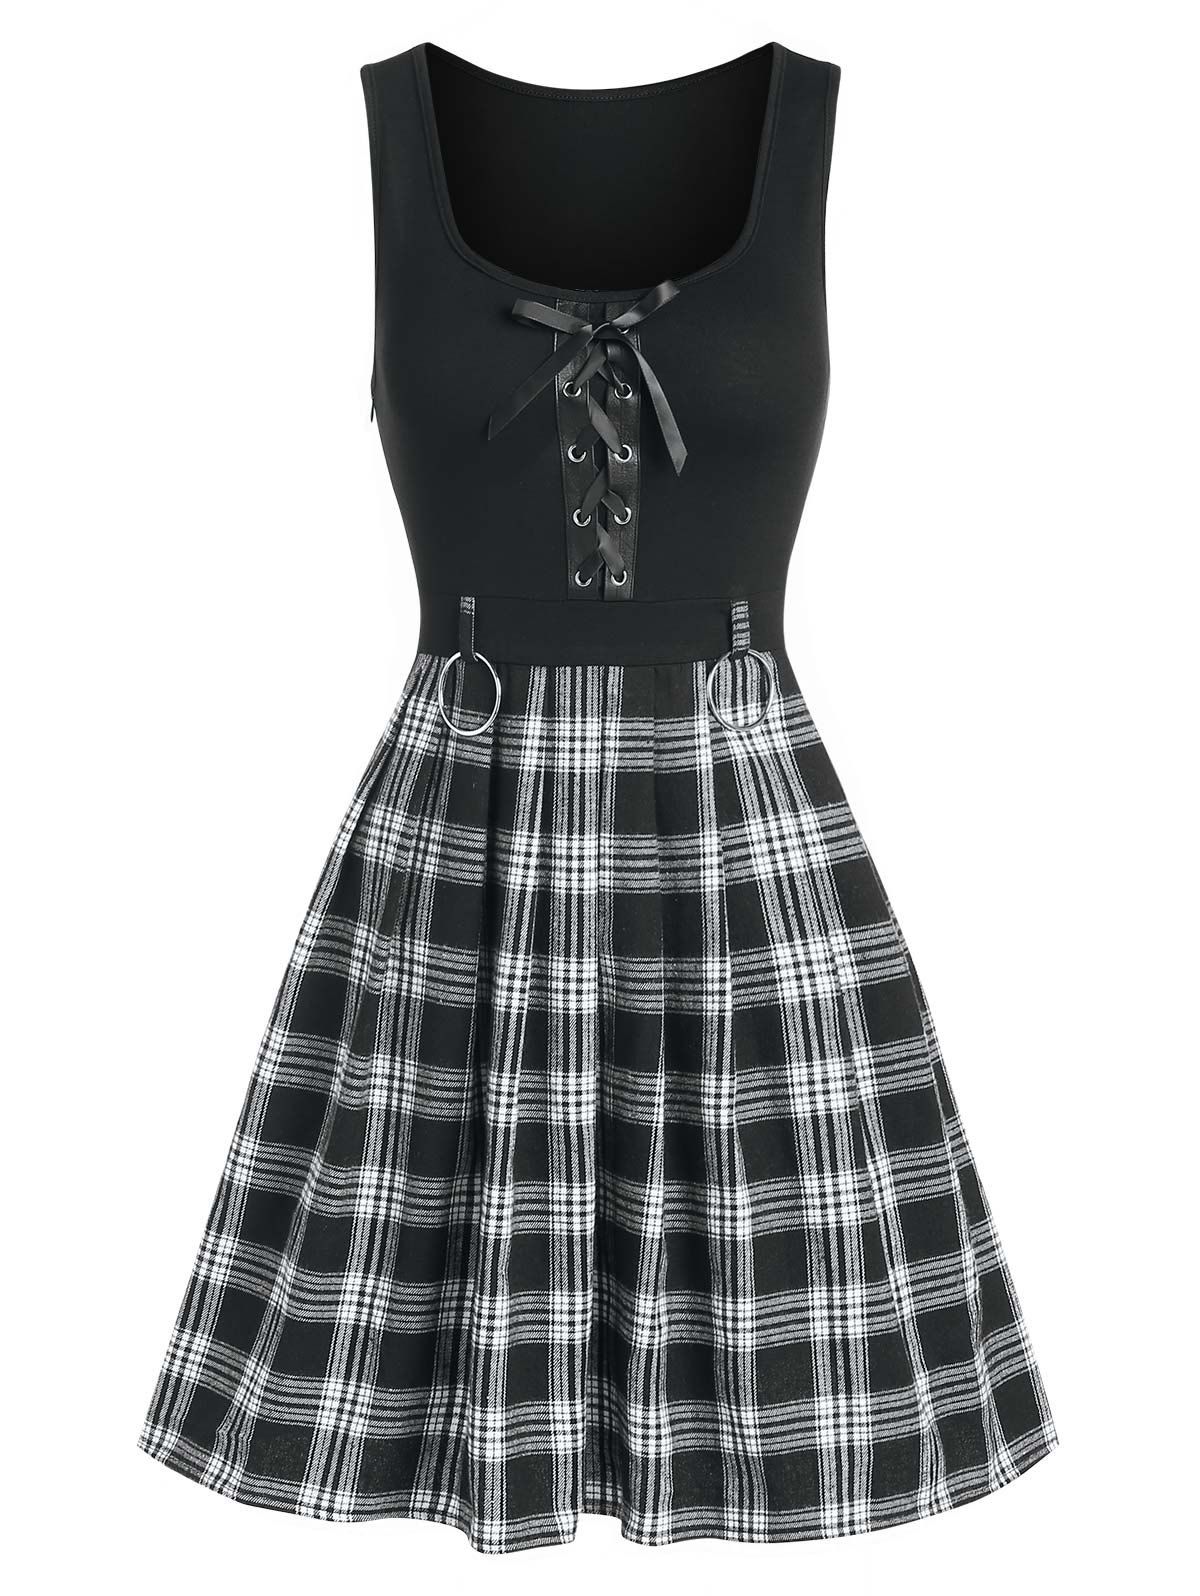 Gothic Lace Up O Ring Plaid Dress - BLACK M